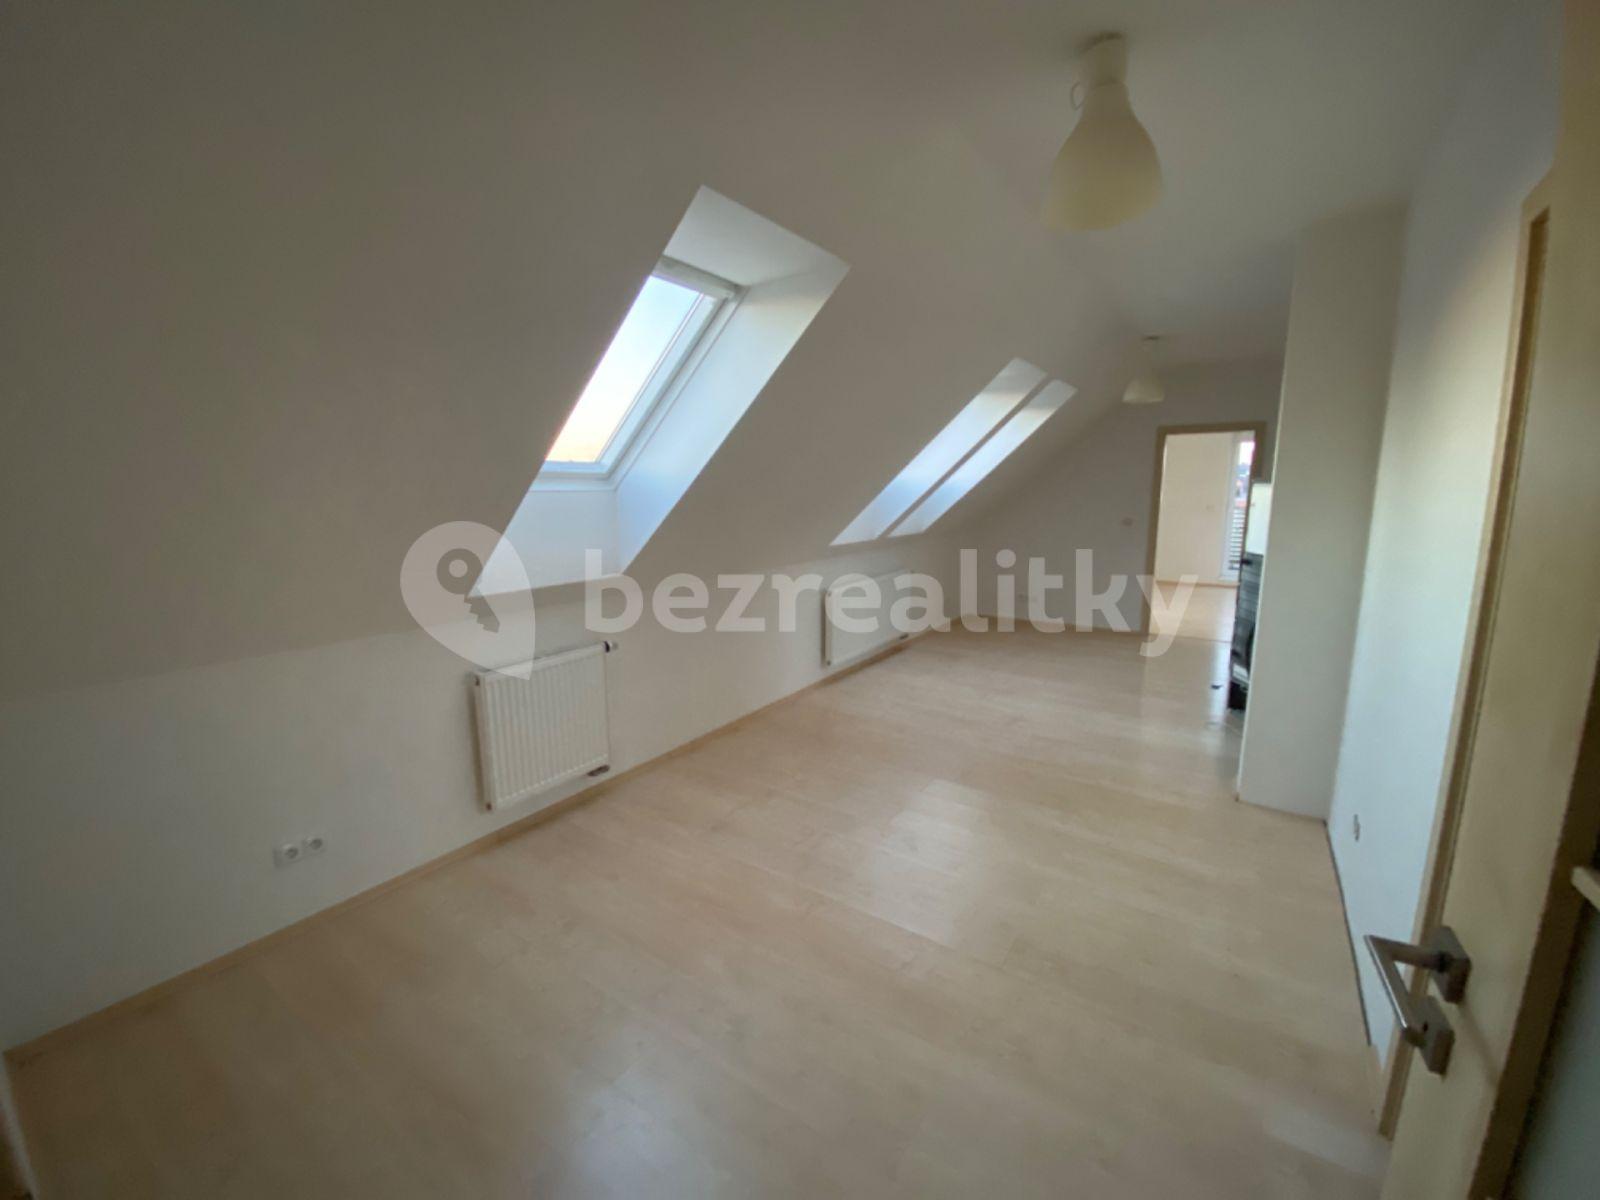 Predaj bytu 3-izbový 69 m², Šípková, Mukařov, Středočeský kraj